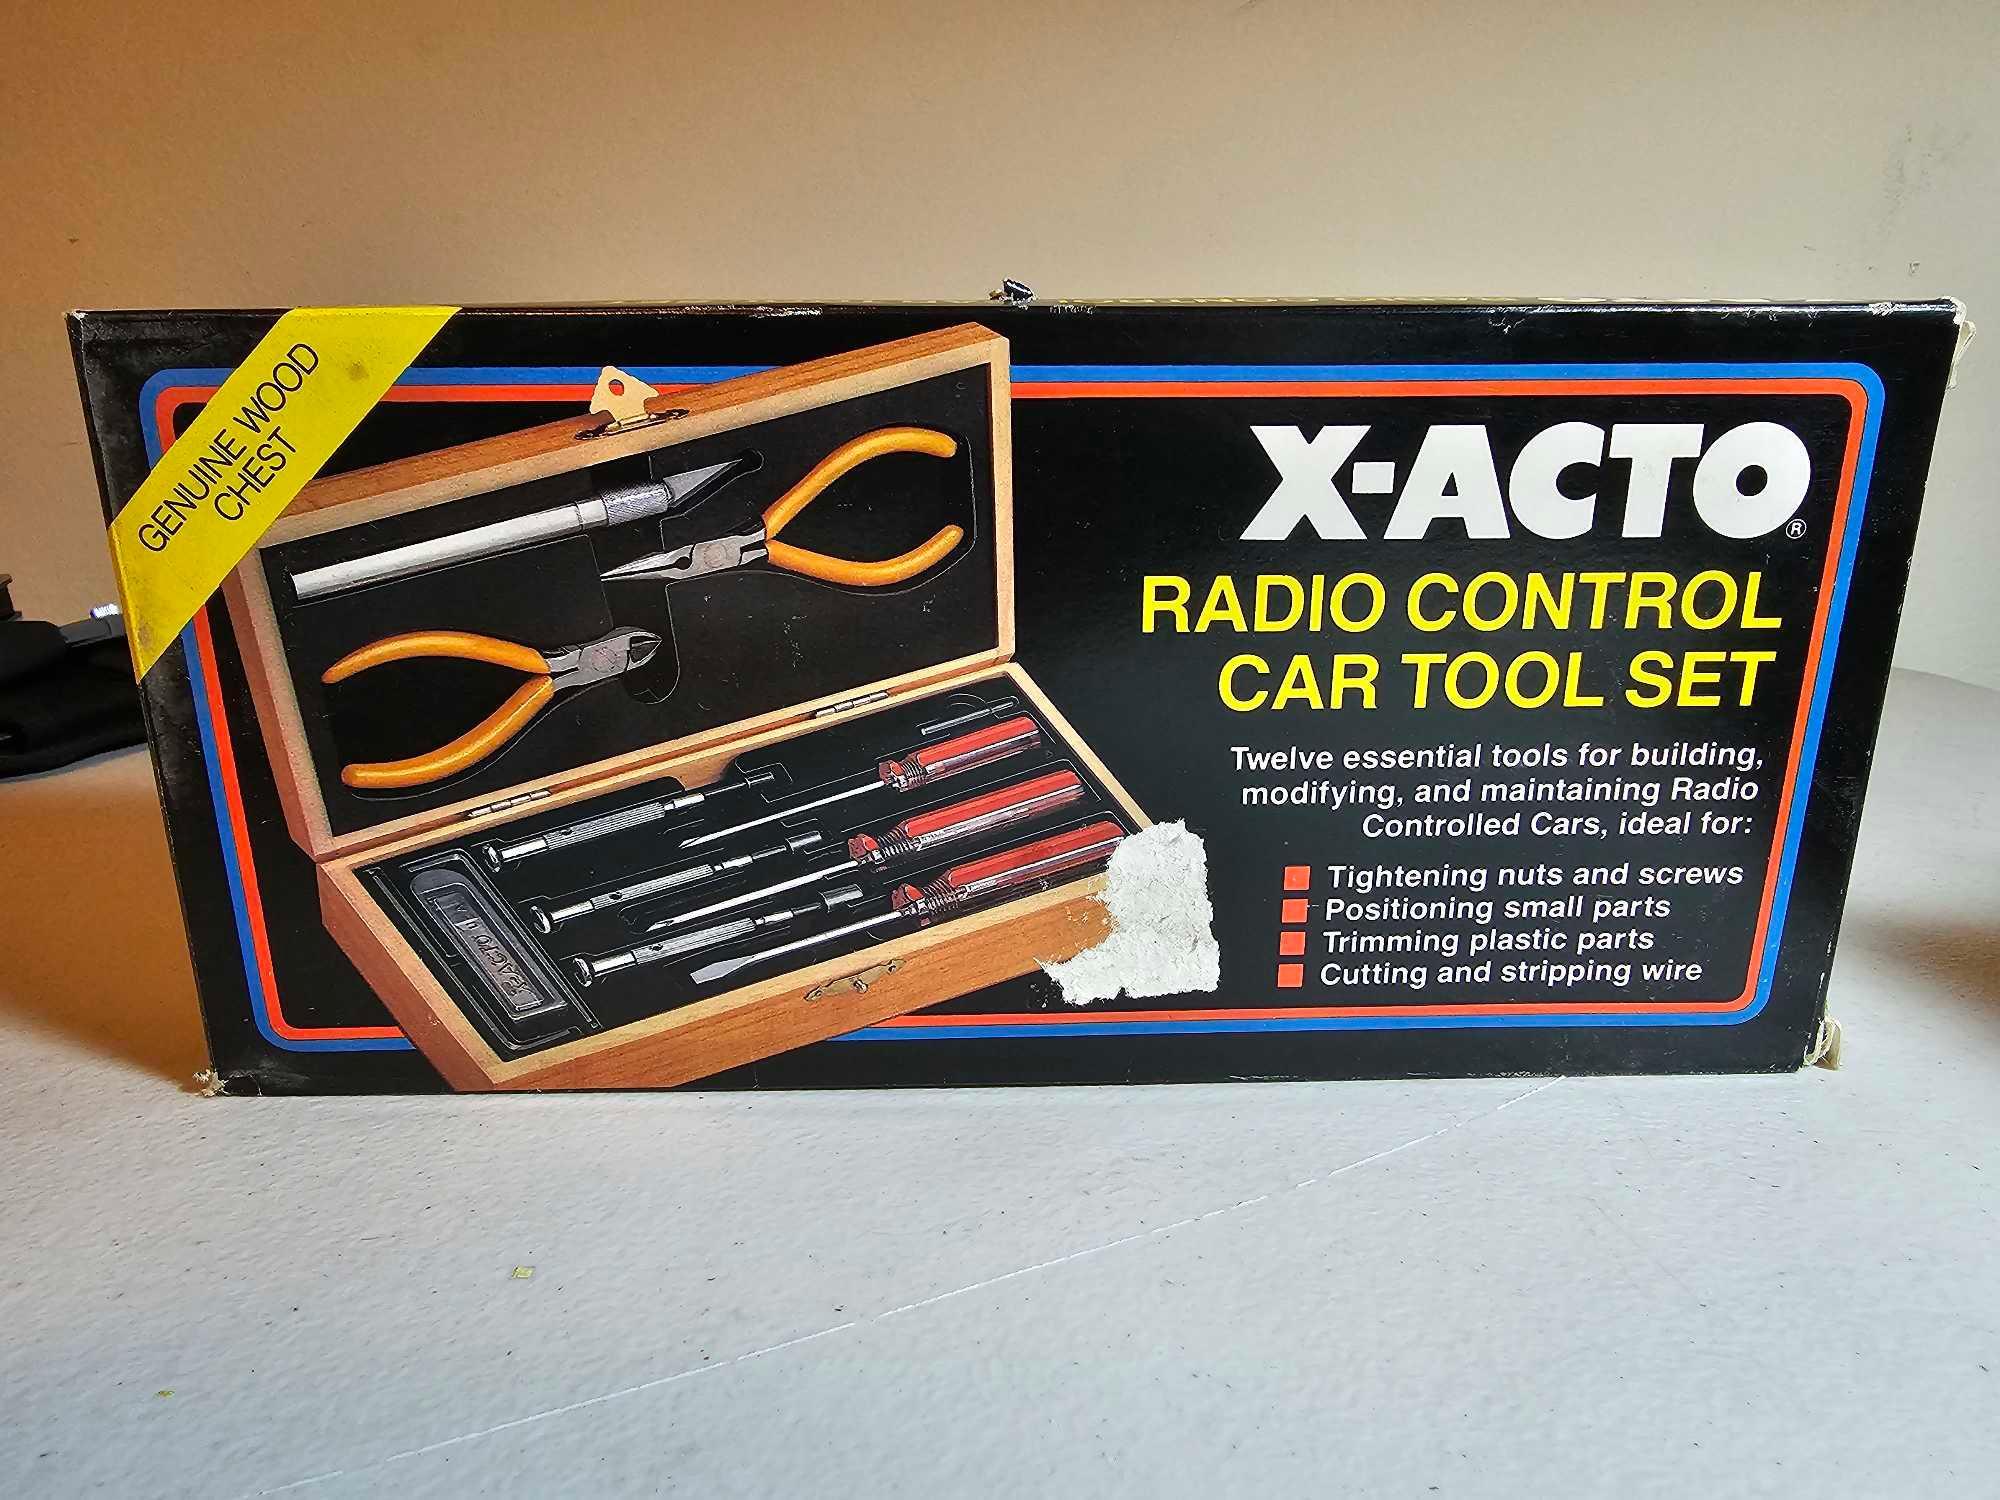 Xacto Craft Tool